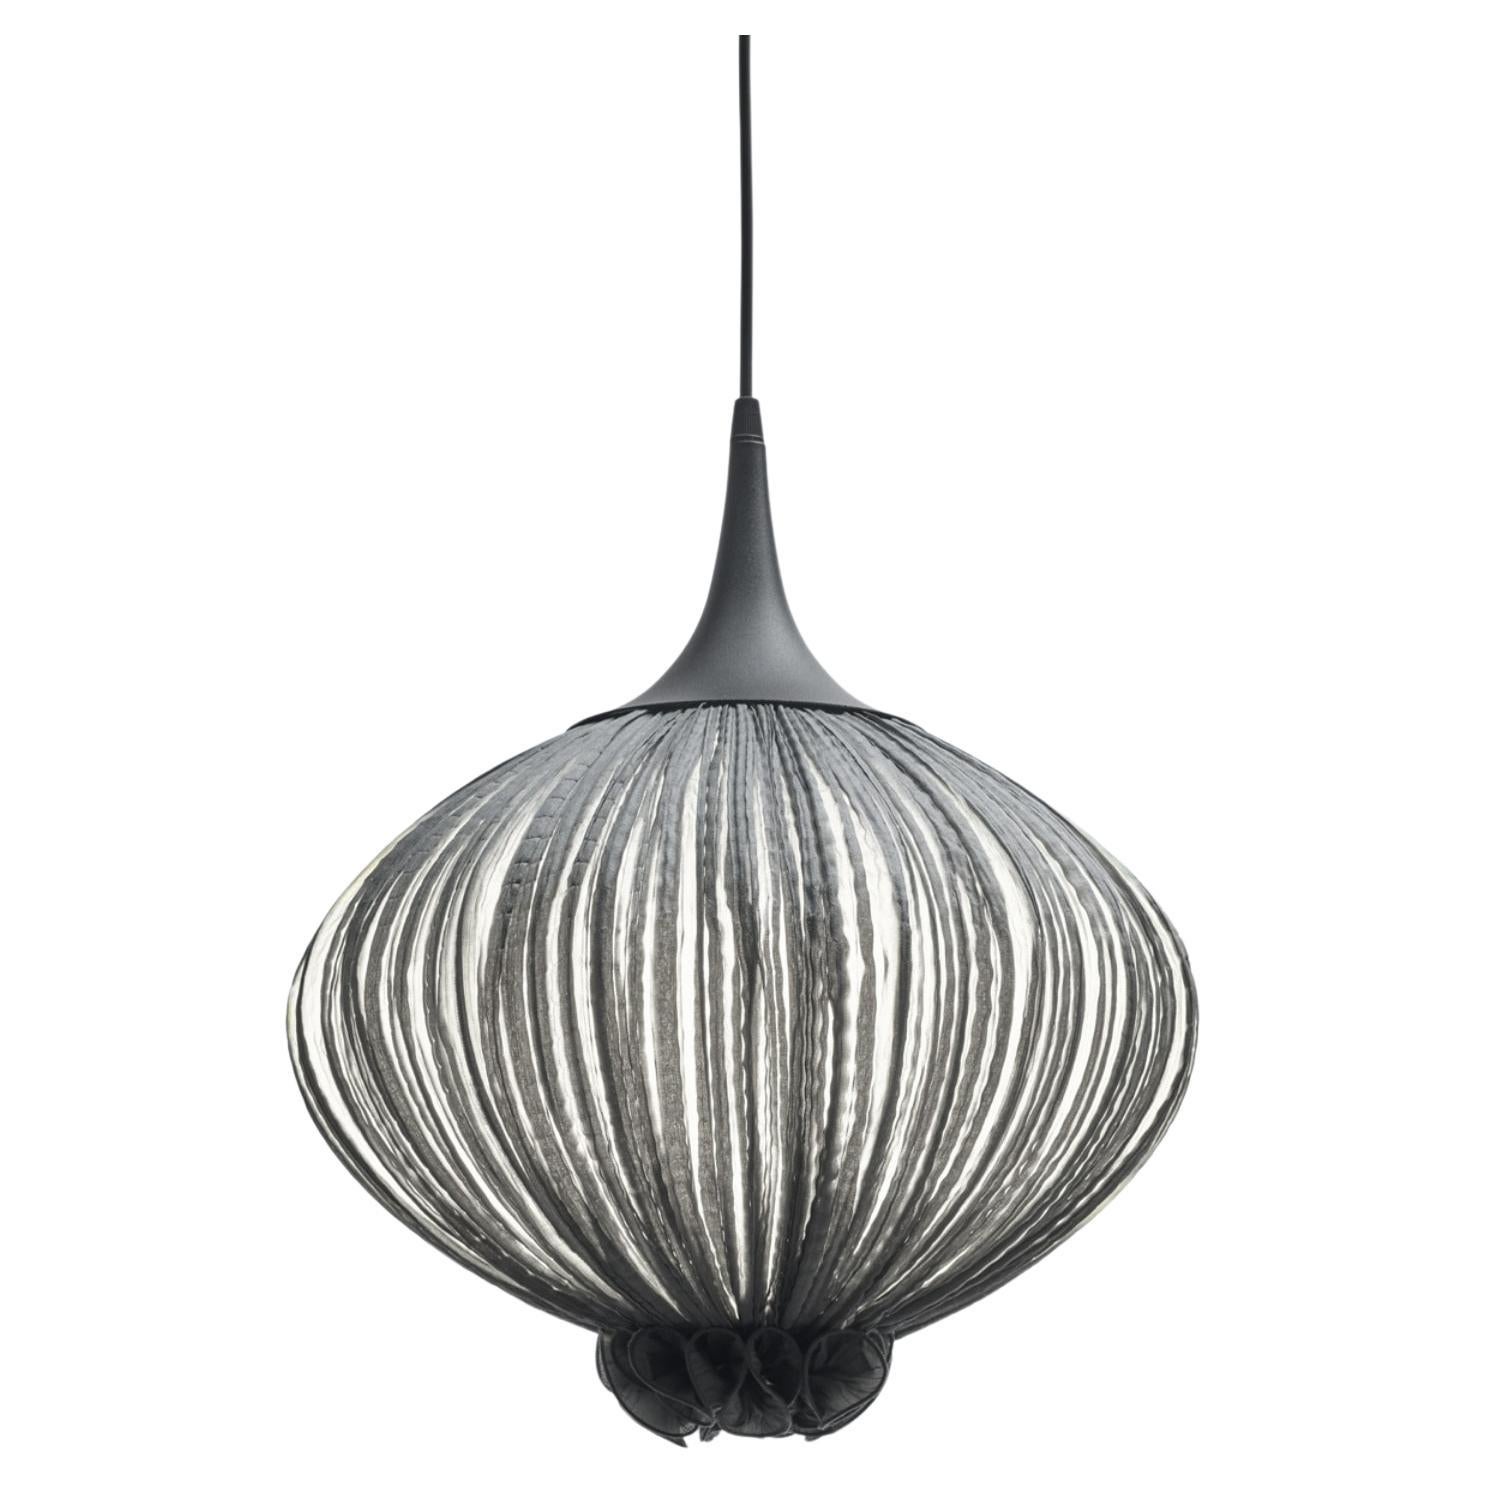 Silk over Metal "Suuria Son" Pendant Lamp by Aqua Creations